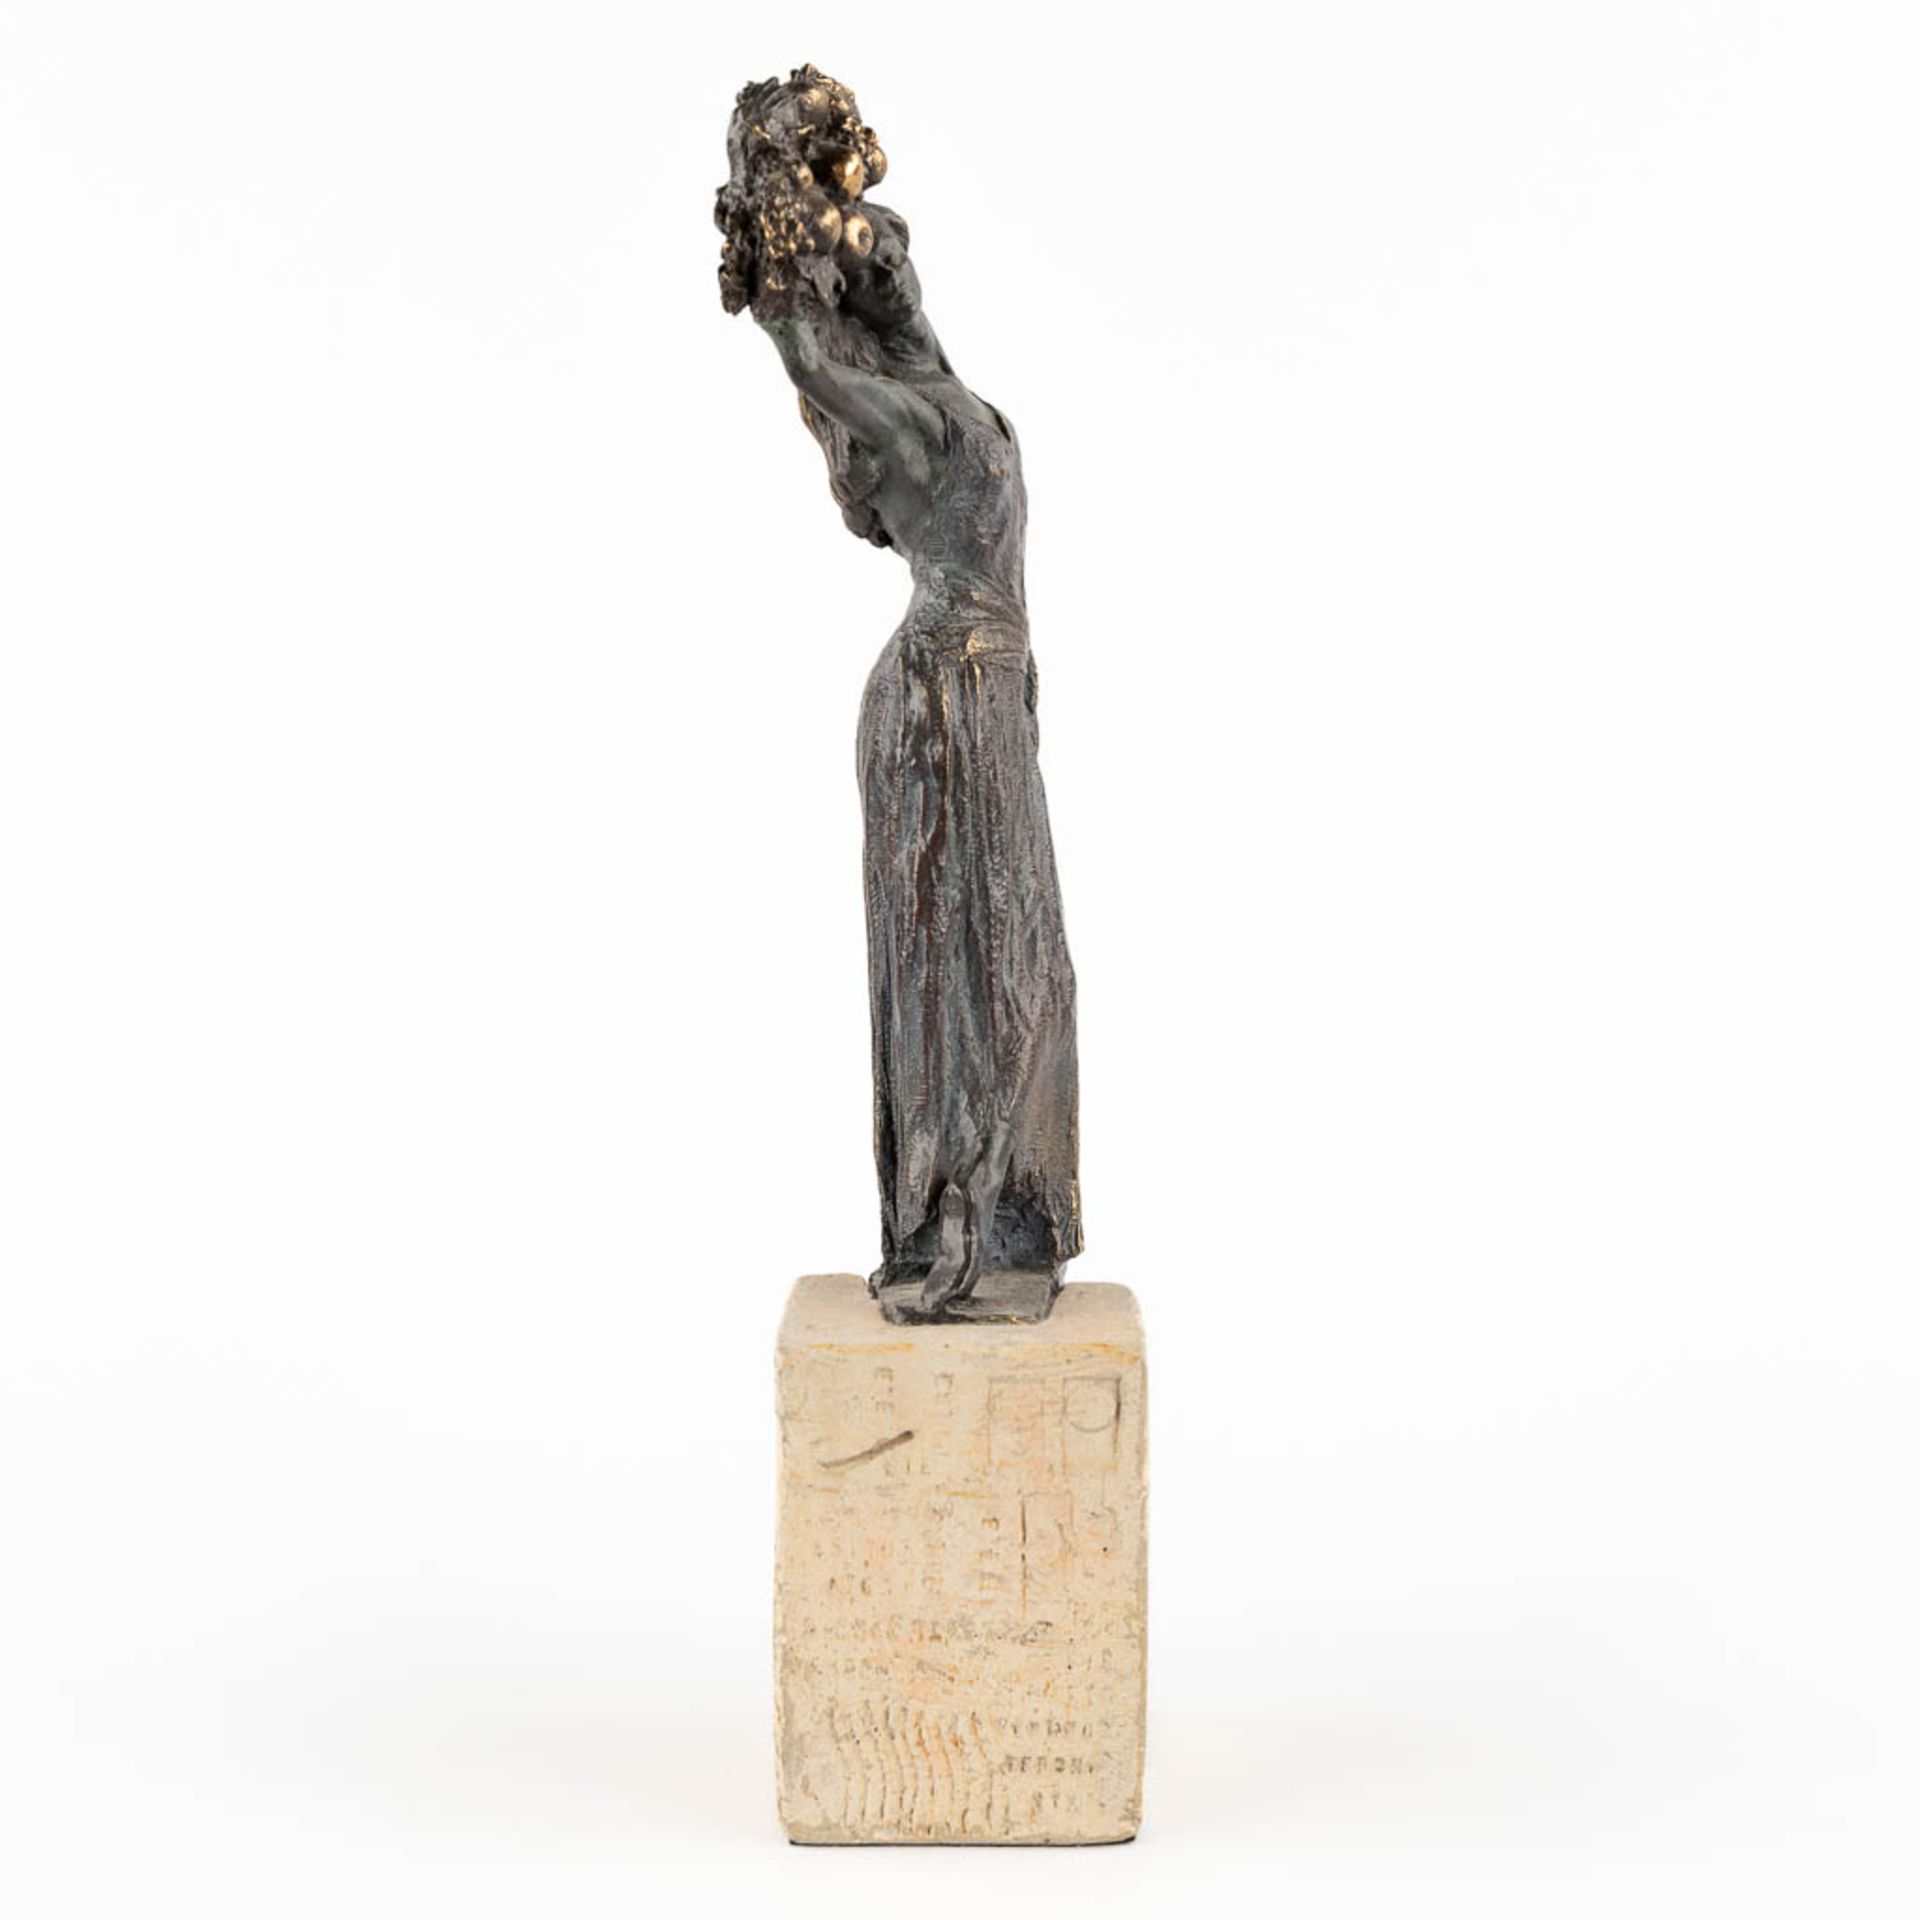 Joan MIRO (1893-1983)(after) 'Verano II' patinated bronze. 271/3999. 1992. (H:24 cm) - Image 6 of 13